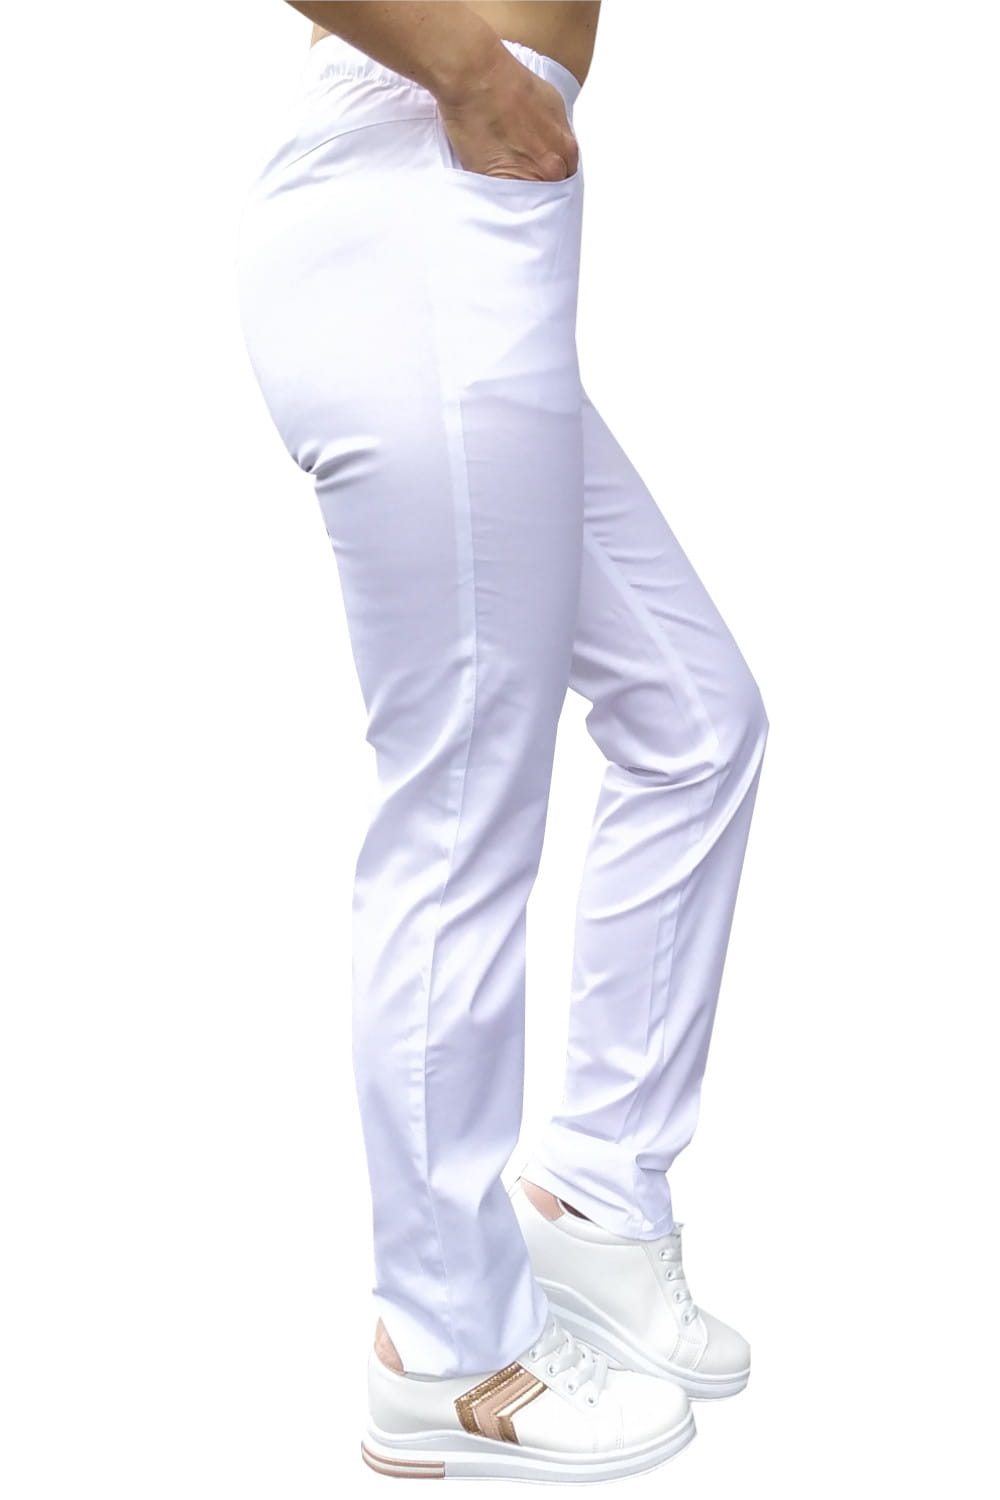 Zdravotnícke Nohavice Elastické Biele #1